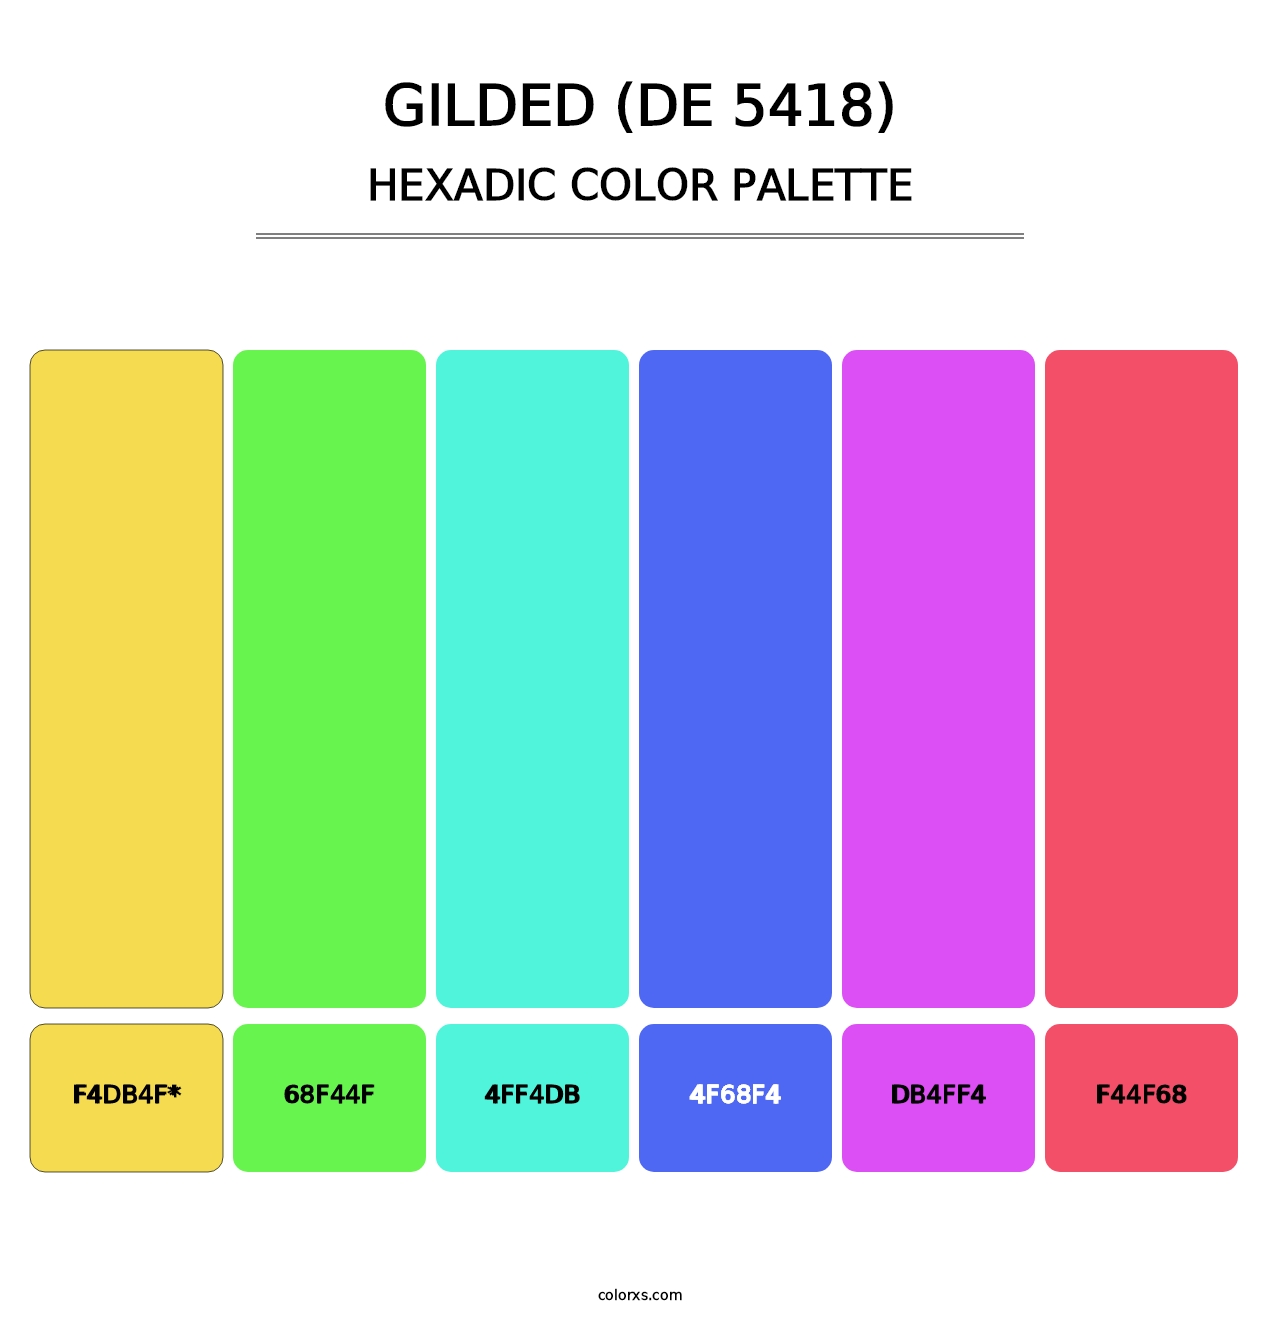 Gilded (DE 5418) - Hexadic Color Palette